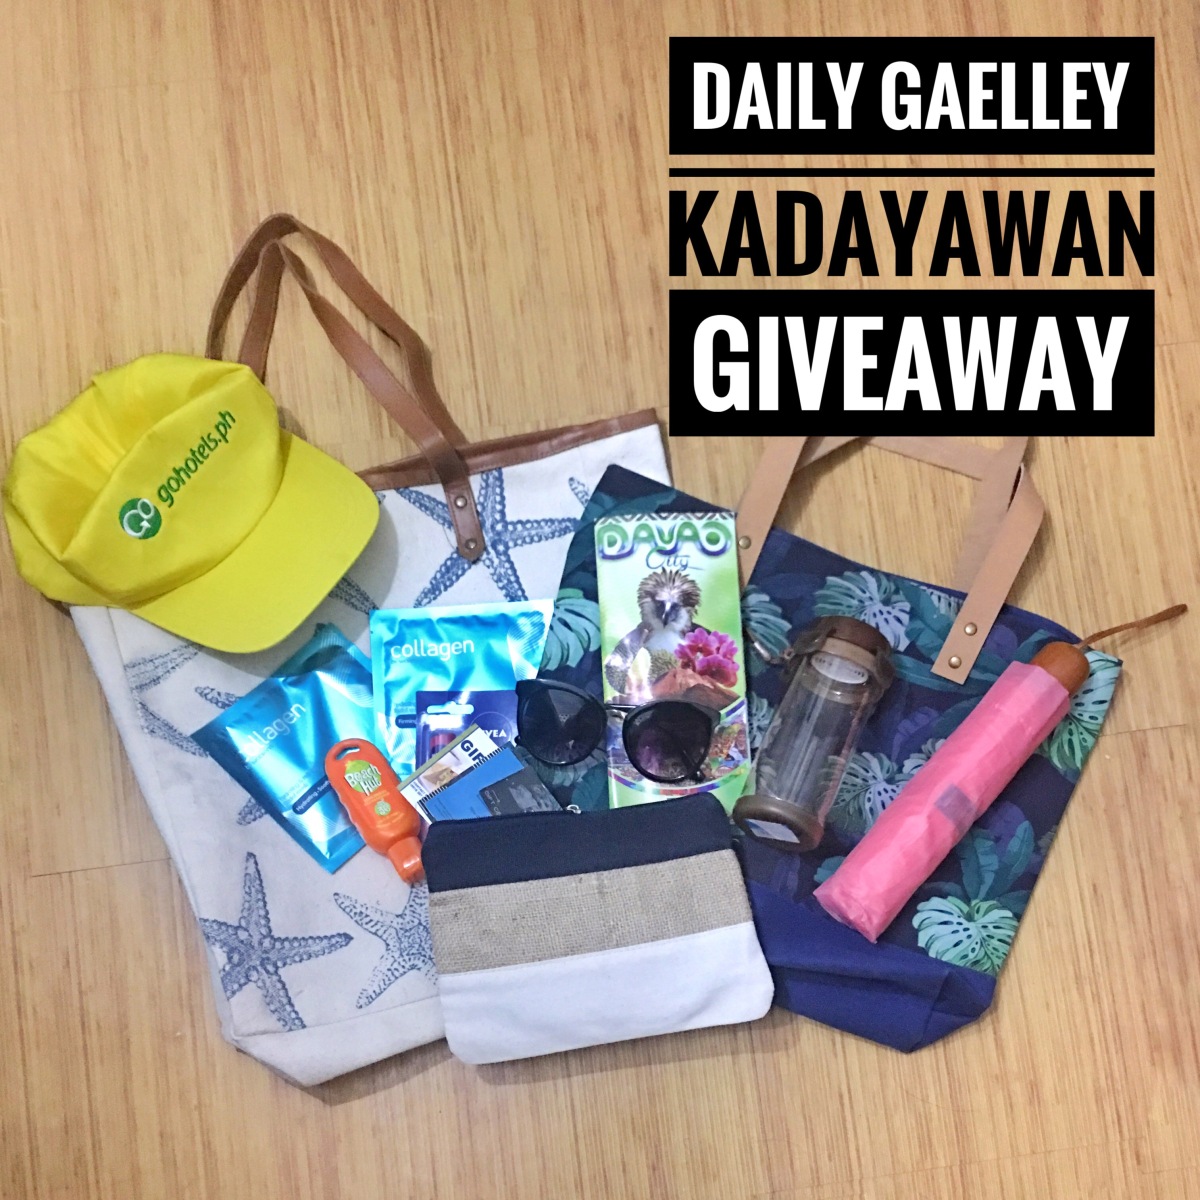 The Daily Gaelley Kadayawan Giveaway